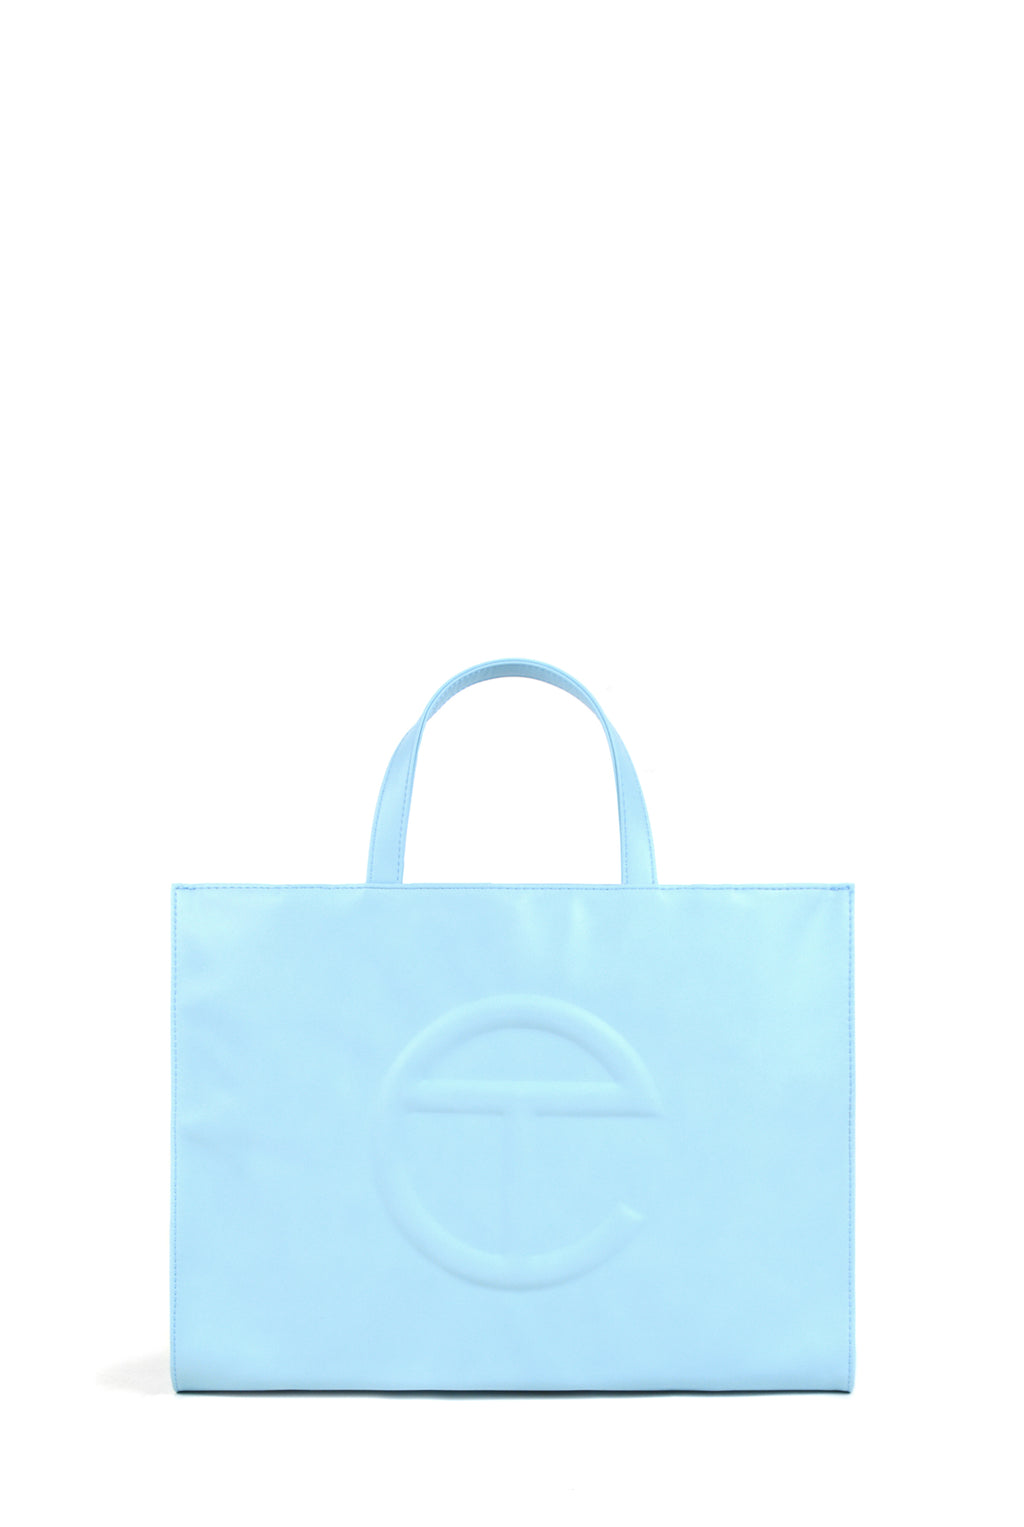 Telfar Medium Shopping Bag, Pool Blue